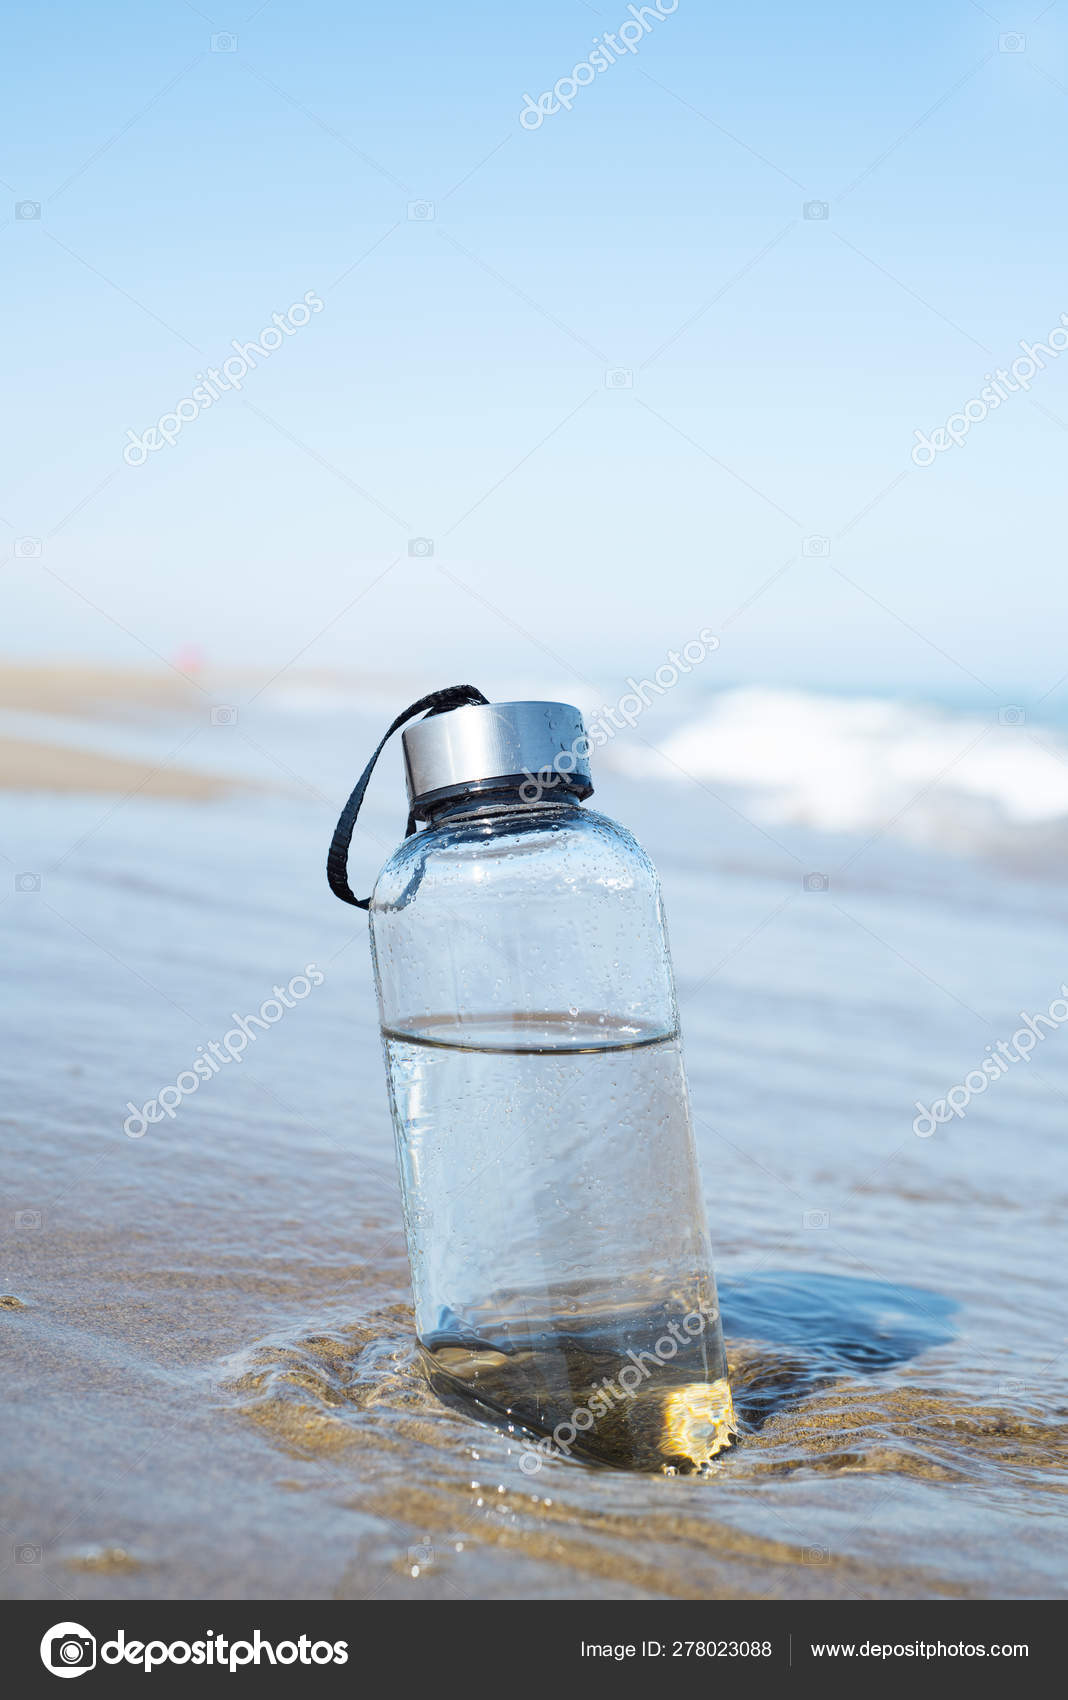 https://st4.depositphotos.com/1022214/27802/i/1600/depositphotos_278023088-stock-photo-reusable-water-bottle-on-the.jpg